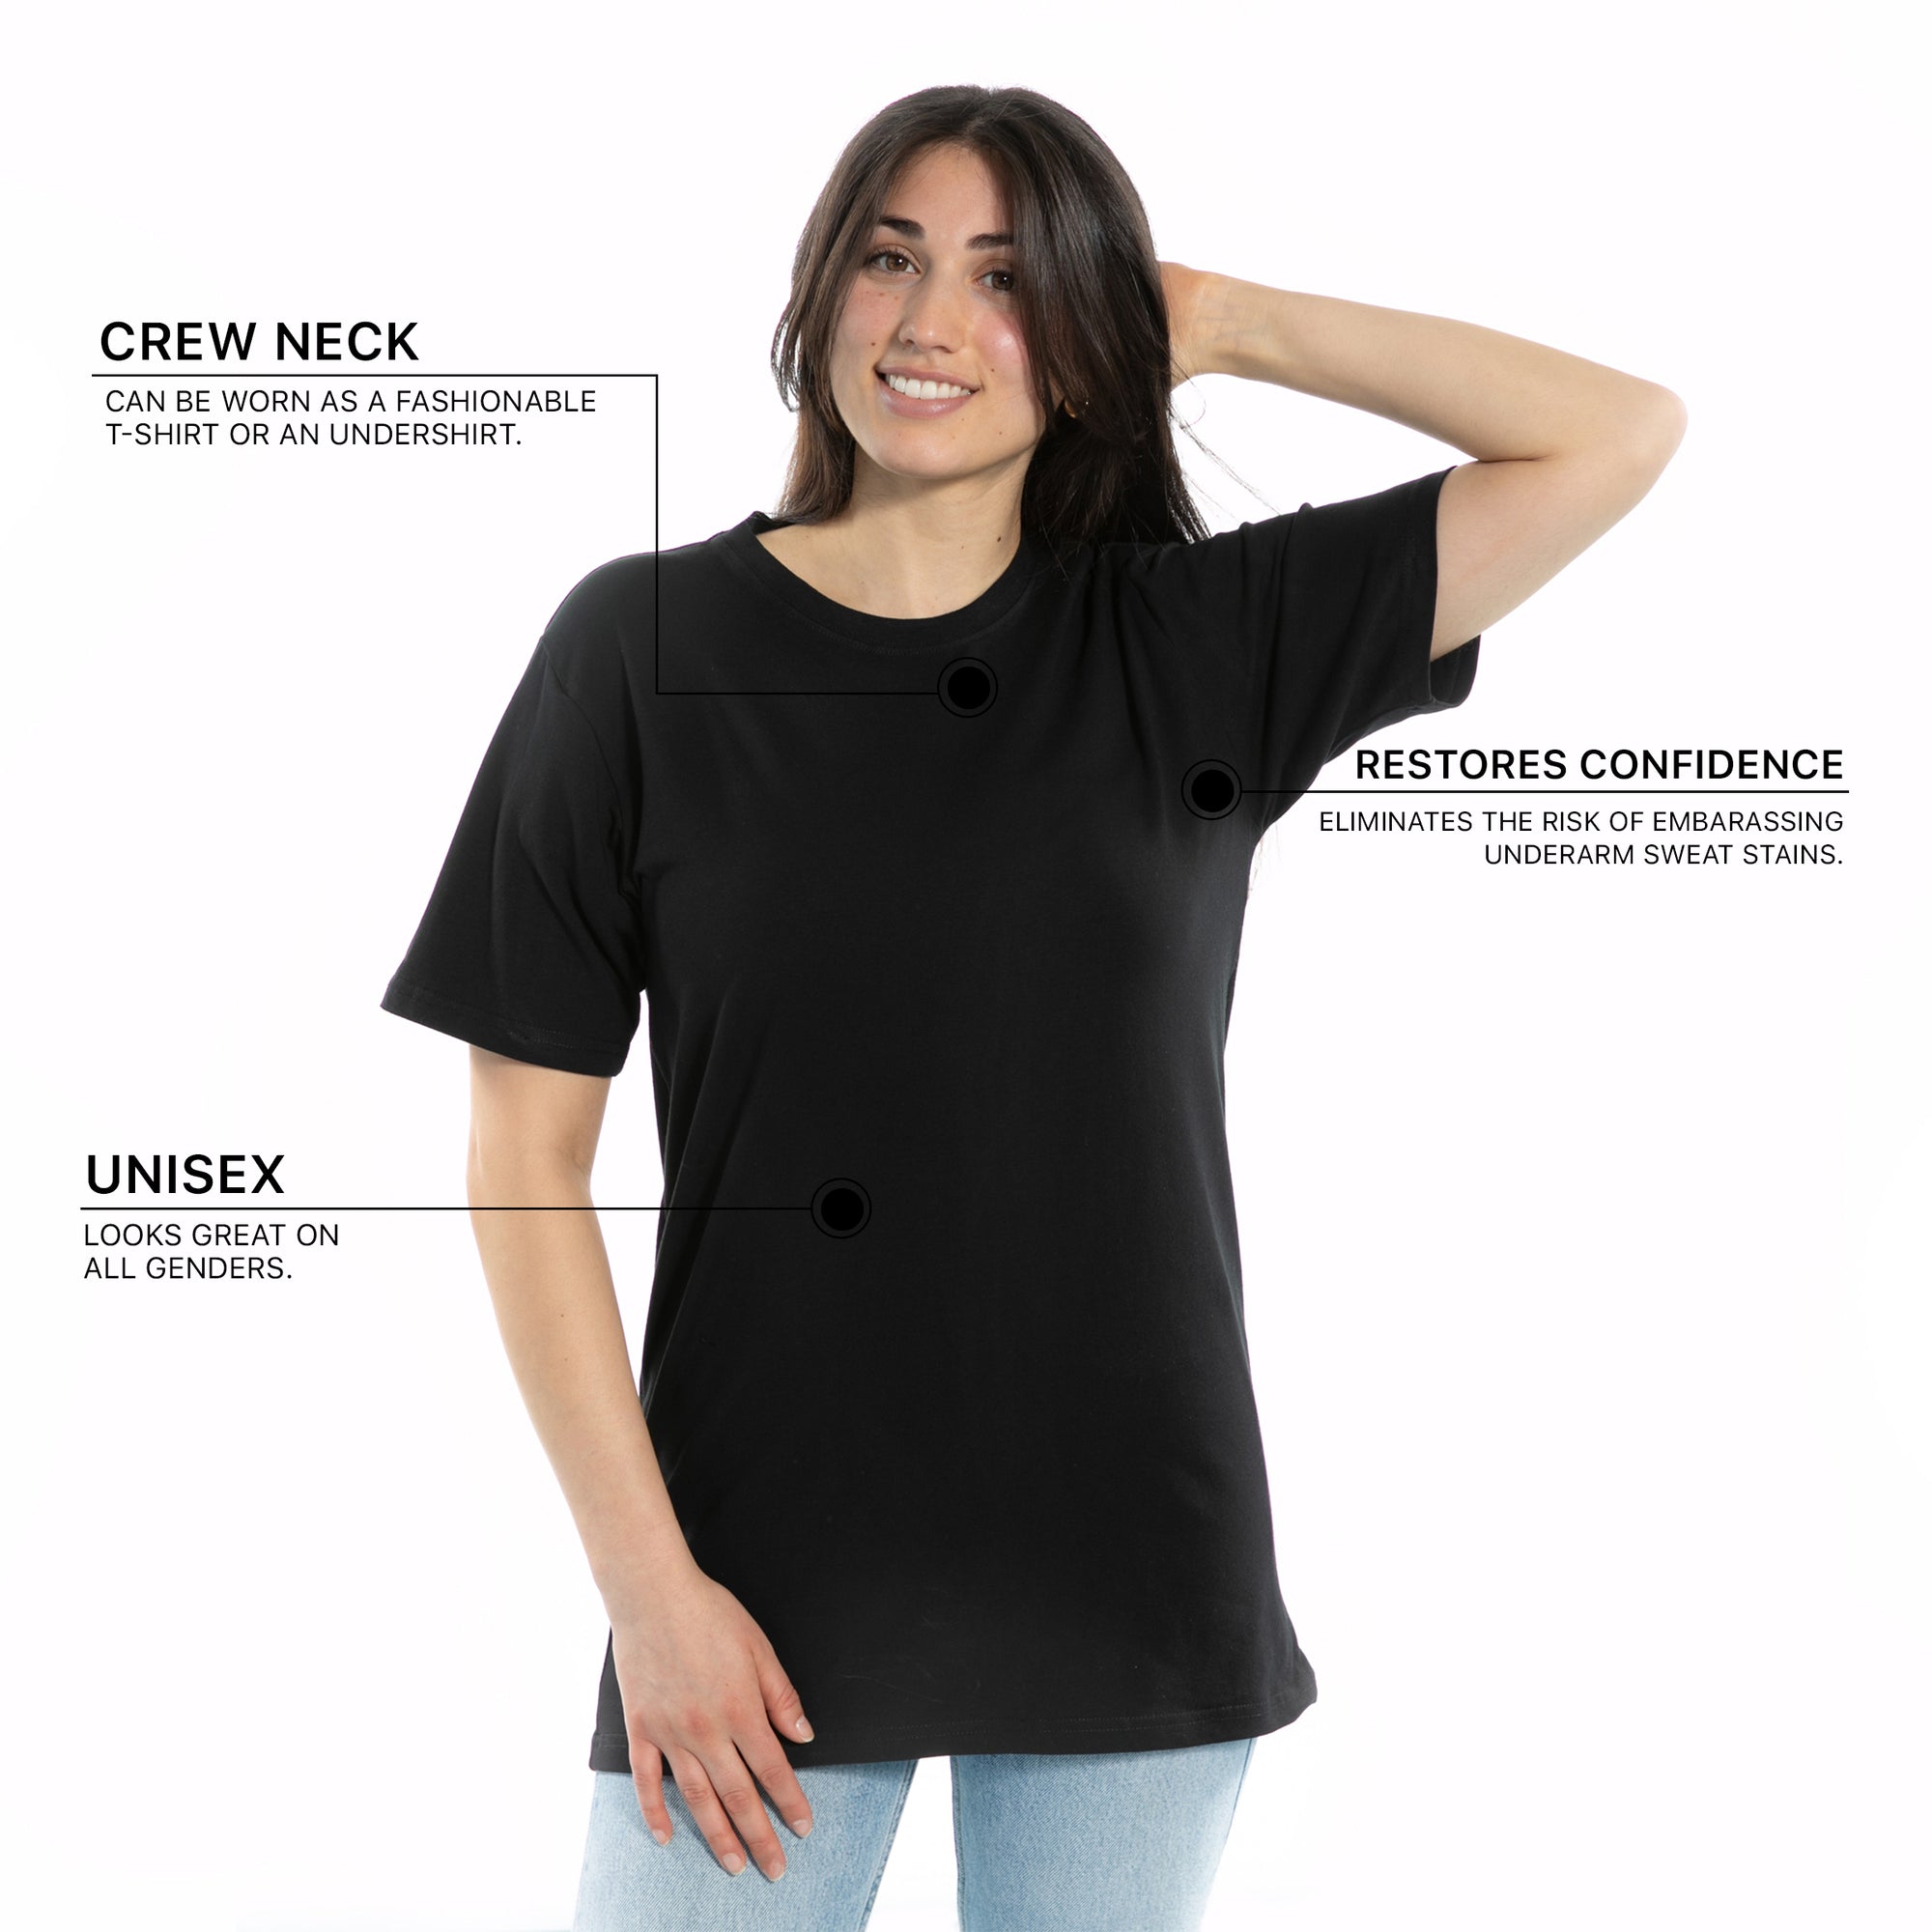 Sweat Proof Crewneck T-Shirt for Men